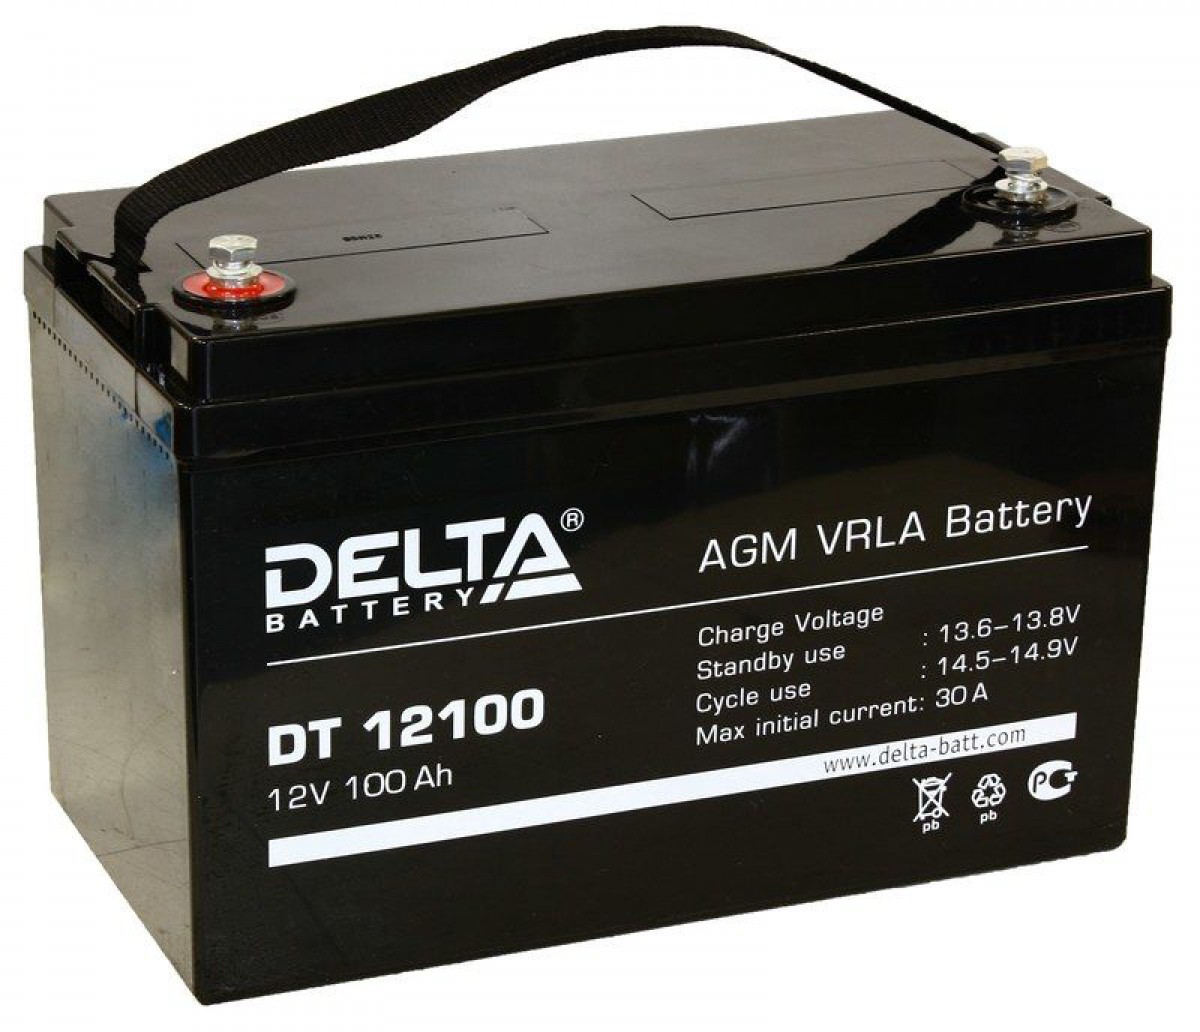 Аккумулятор автомобильный 12в 100ач. Delta Battery DT 12100. Аккумуляторная батарея Delta DT 12100 (12v / 100ah). DT 12100 Delta аккумуляторная батарея. Delta 100 Ач 12 вольт DT 12100.